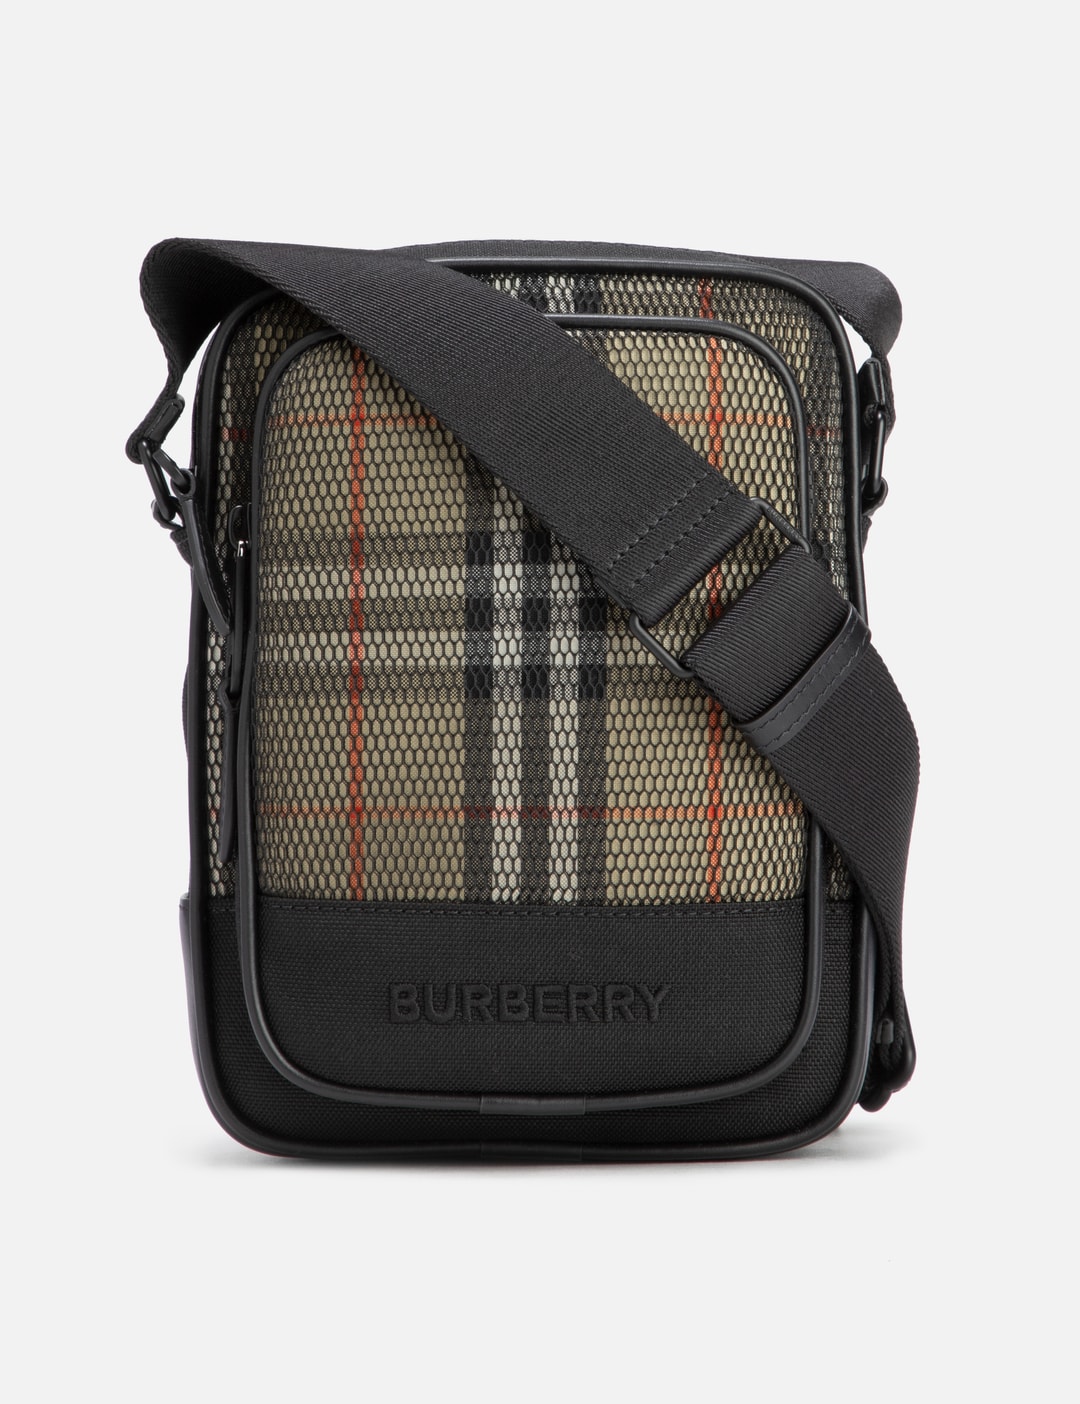 Burberry Crossbody Bag freddie Men 8065907 Fabric Beige Black 840€